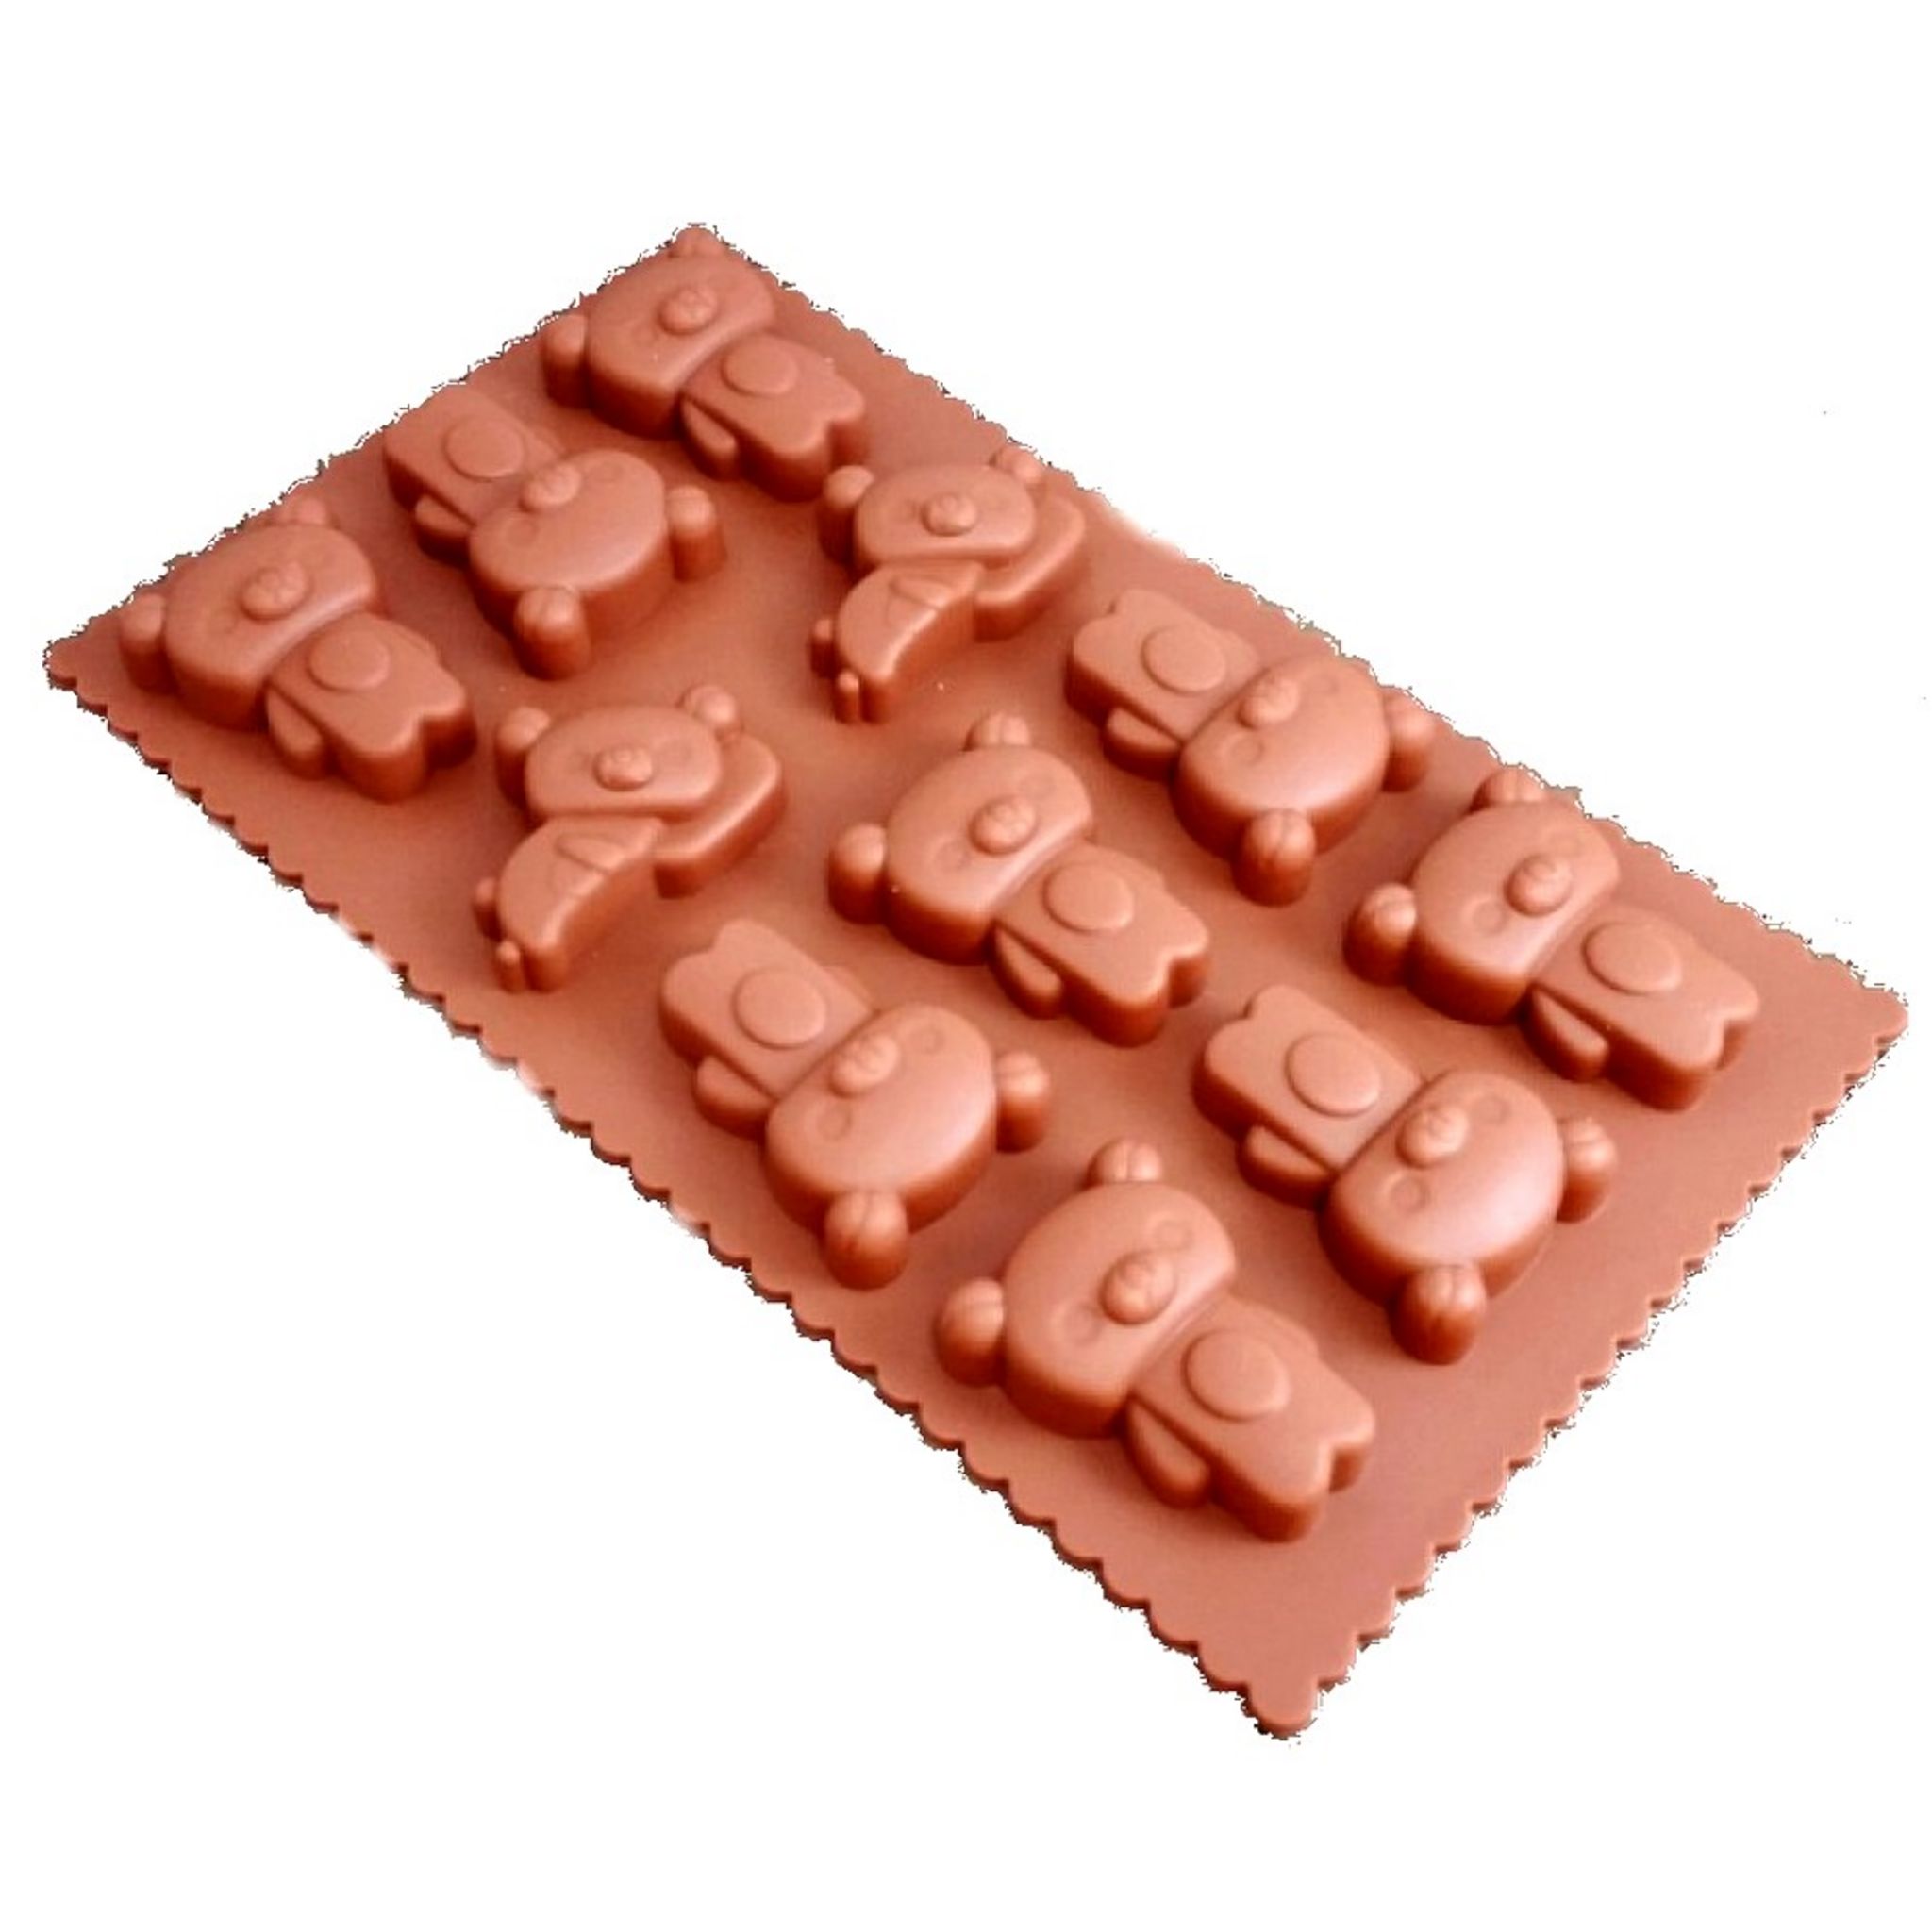 2 moules en silicone oursons guimauve-chocolat - N/A - Kiabi - 28.20€